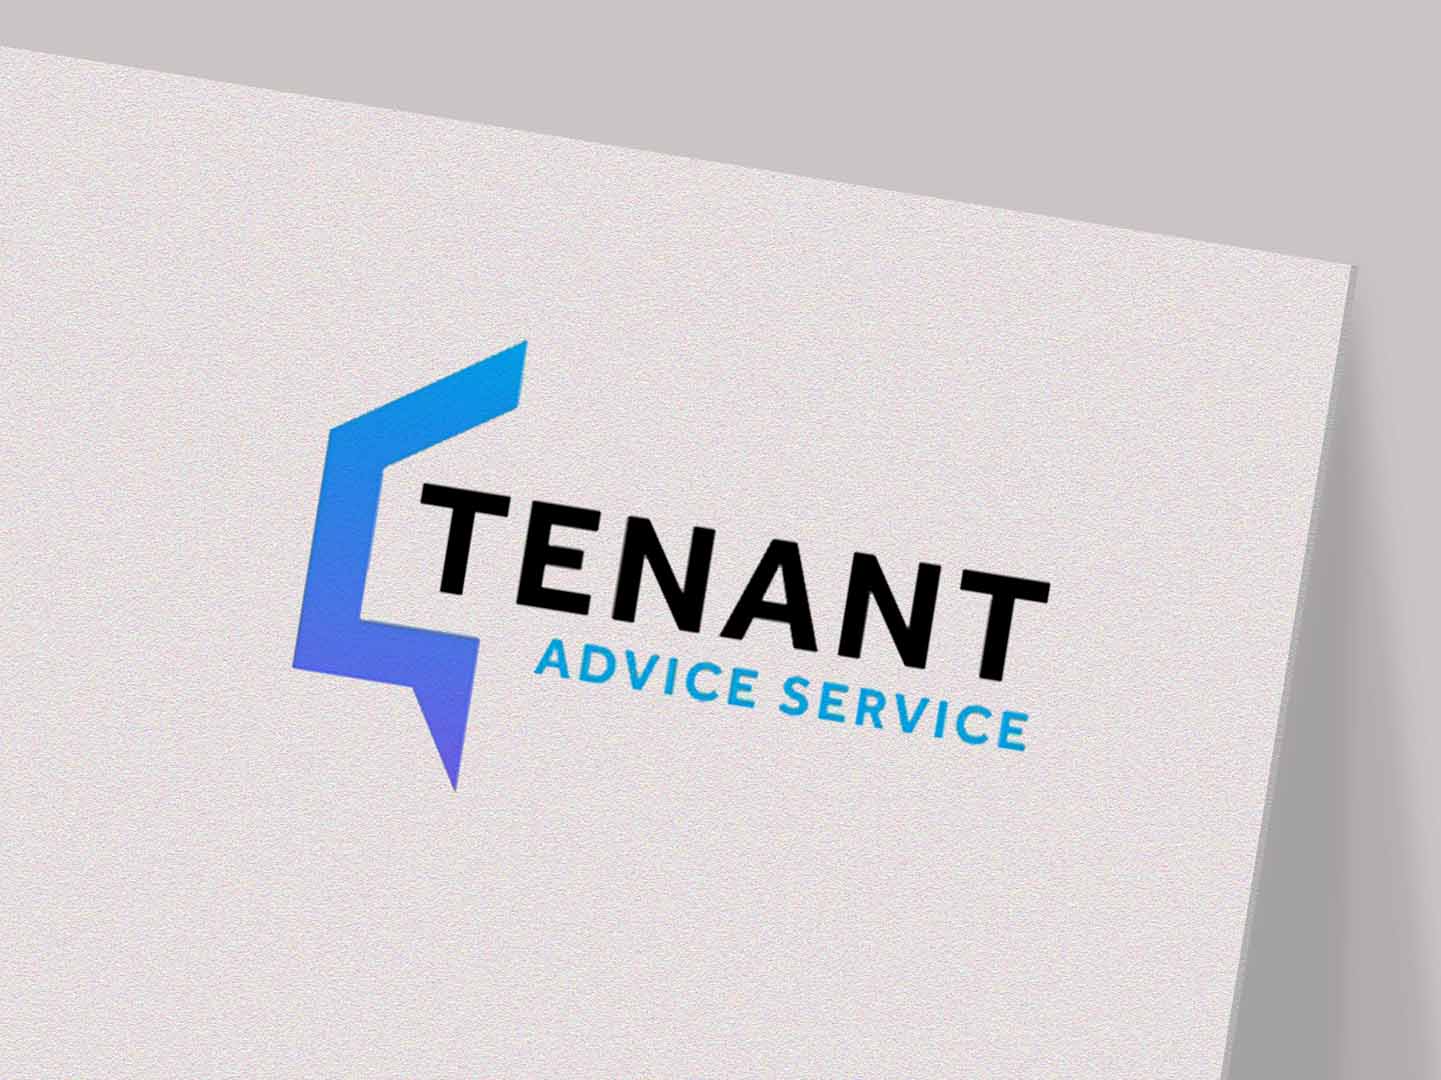 Tenant advice abstract house shape logo